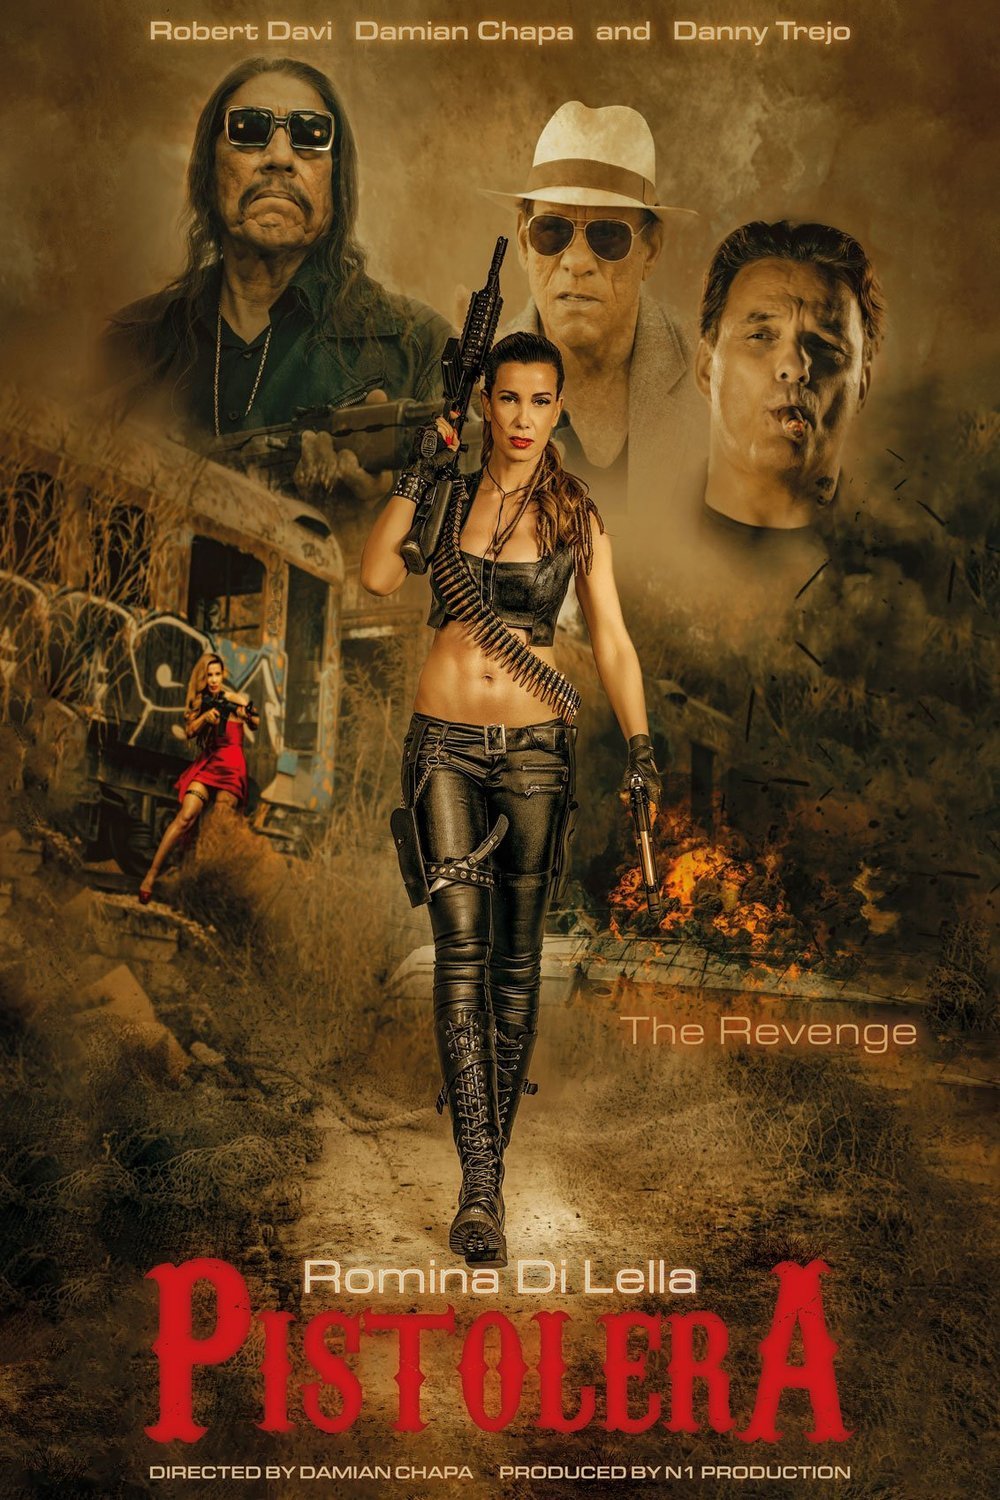 Poster of the movie Pistolera